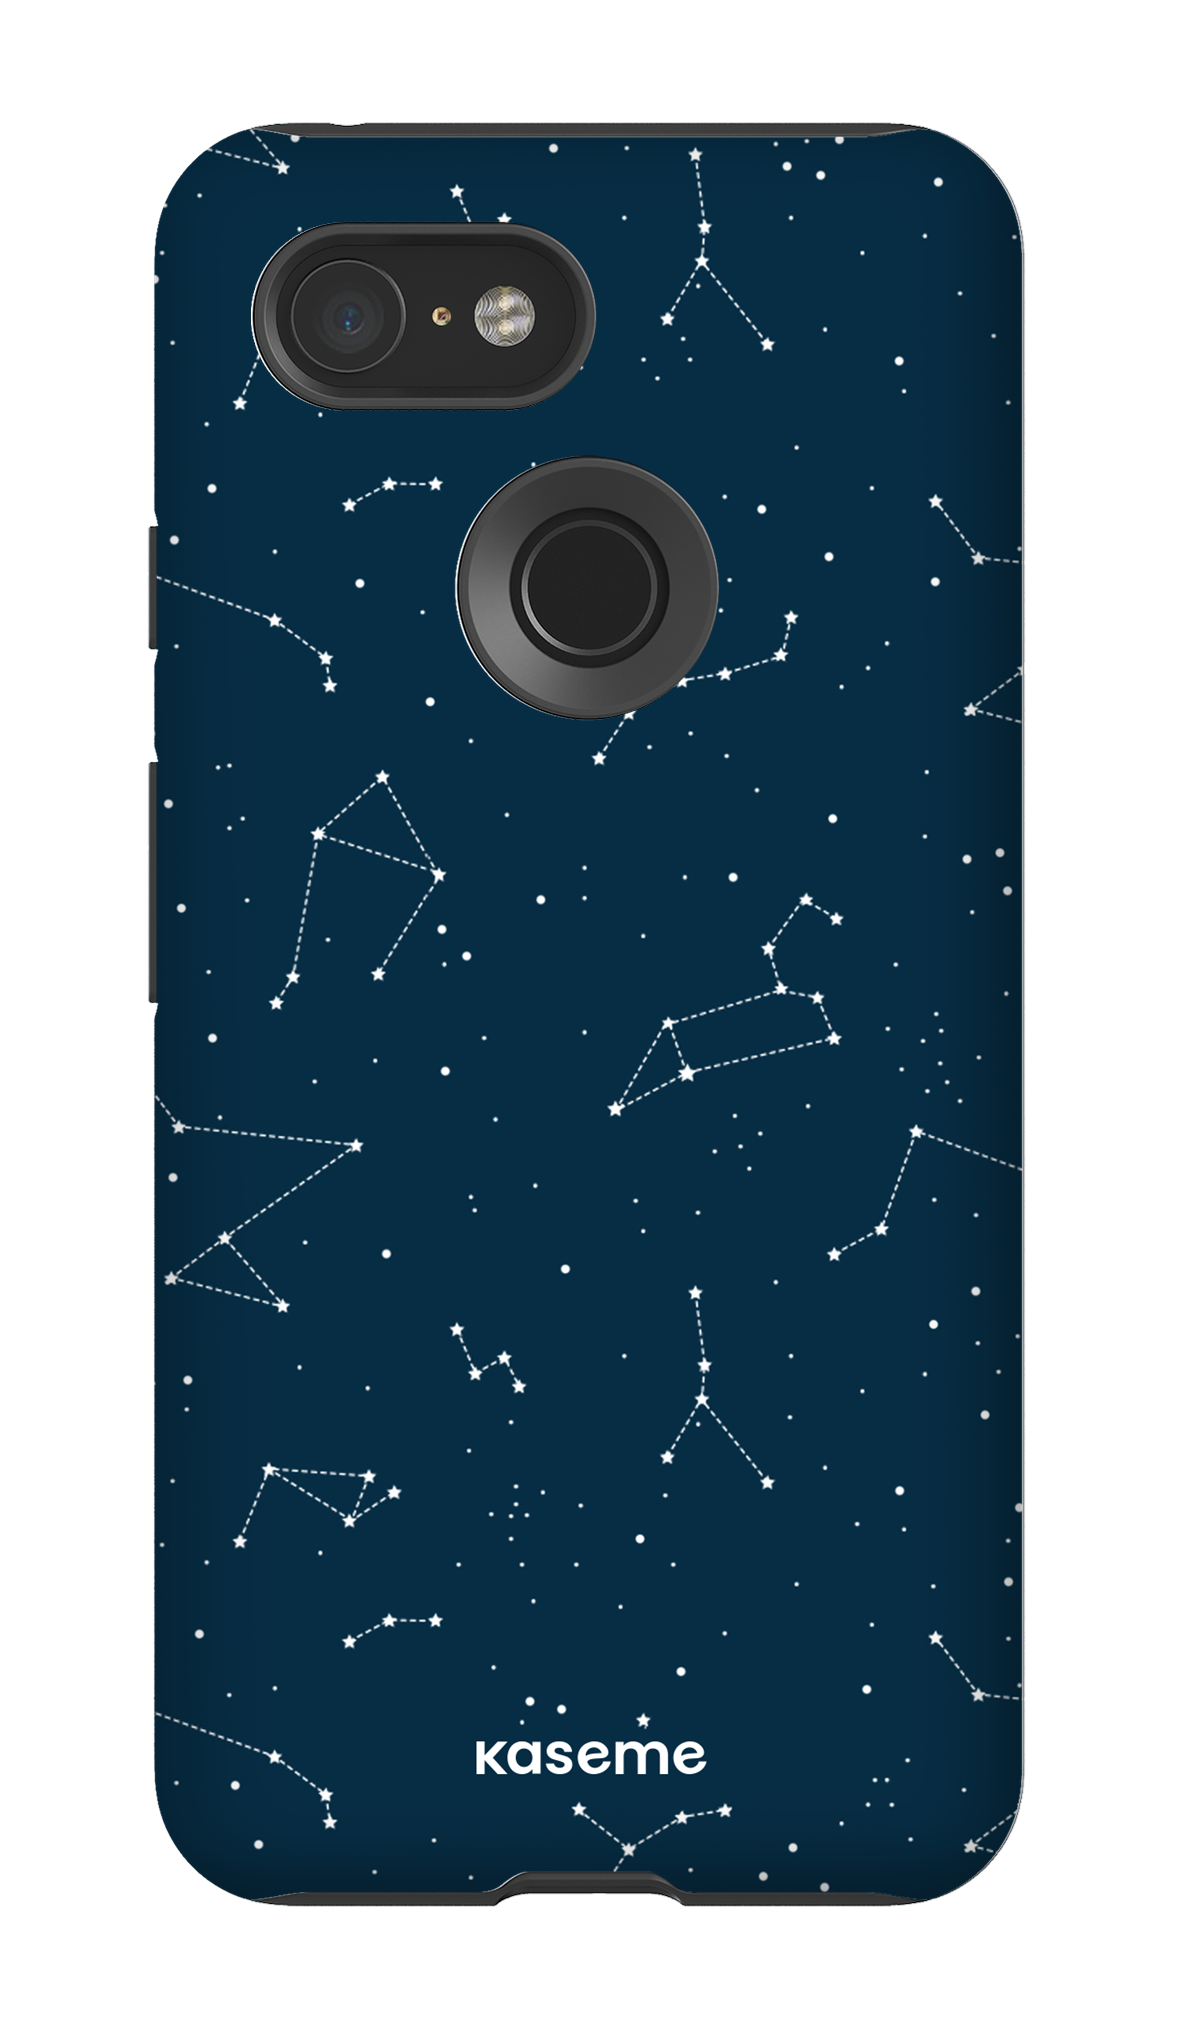 Cosmos - Google Pixel 3